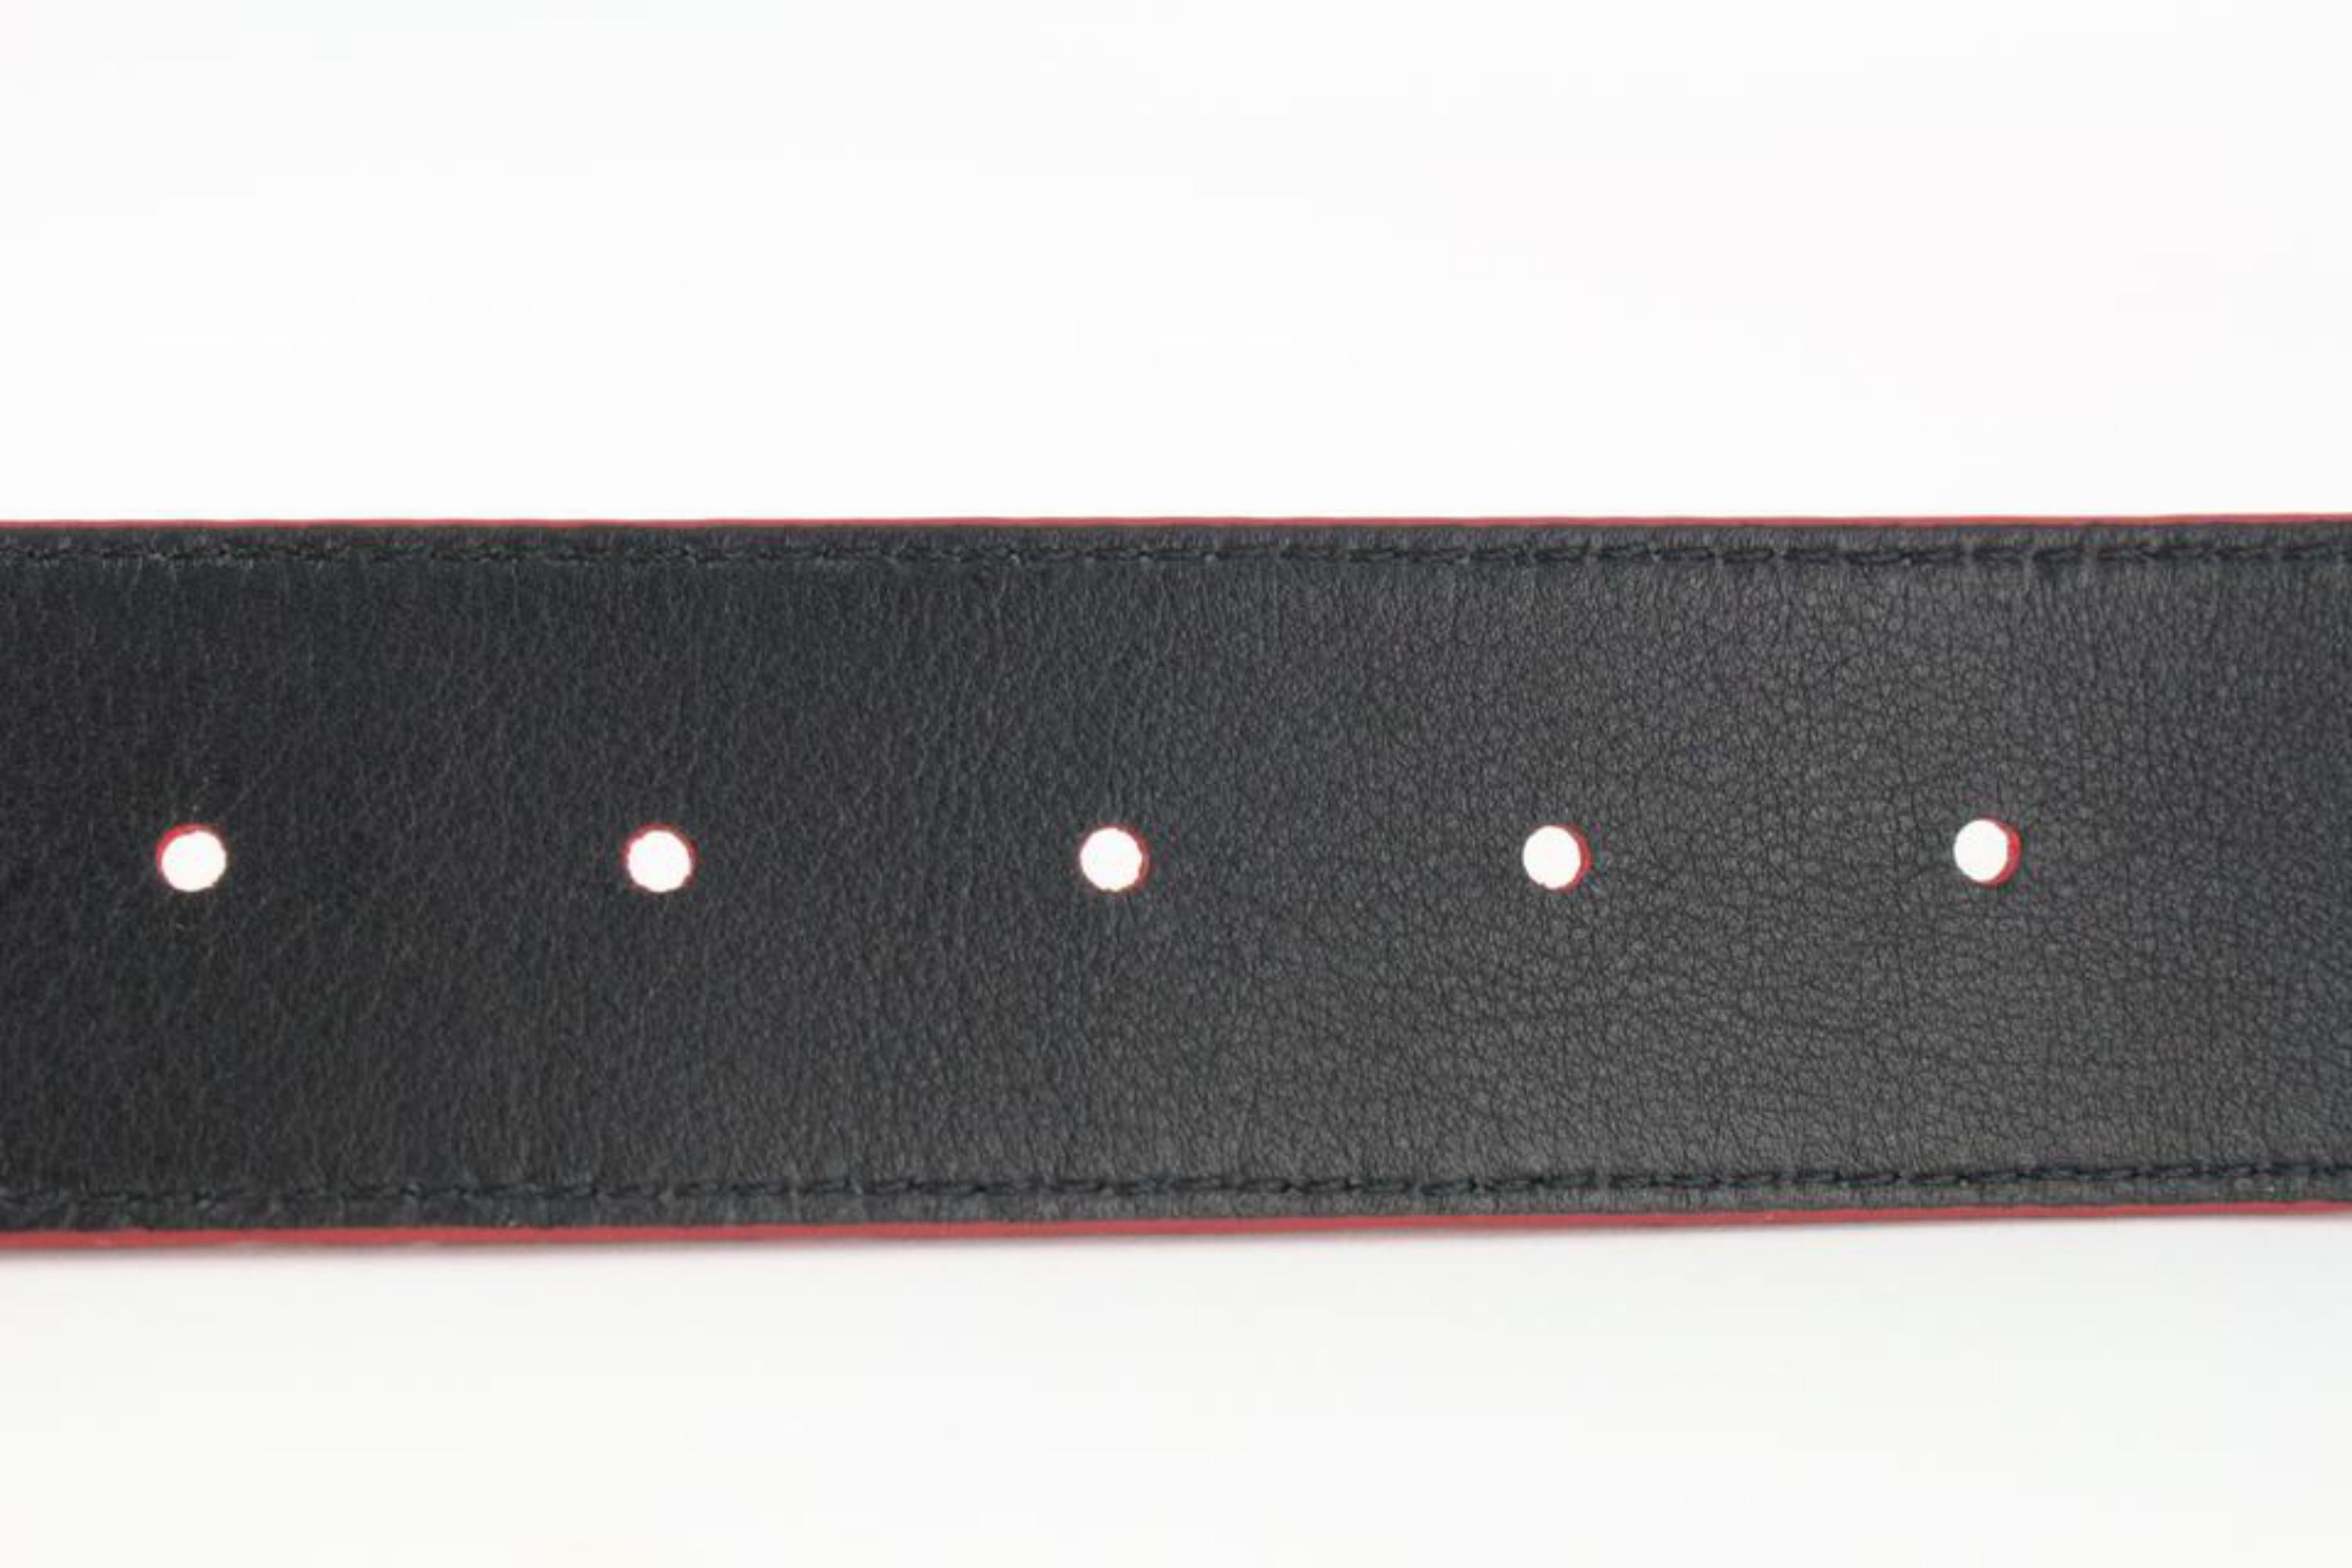 Louis Vuitton x Supreme Initiales Belt 40 MM Monogram Red - US